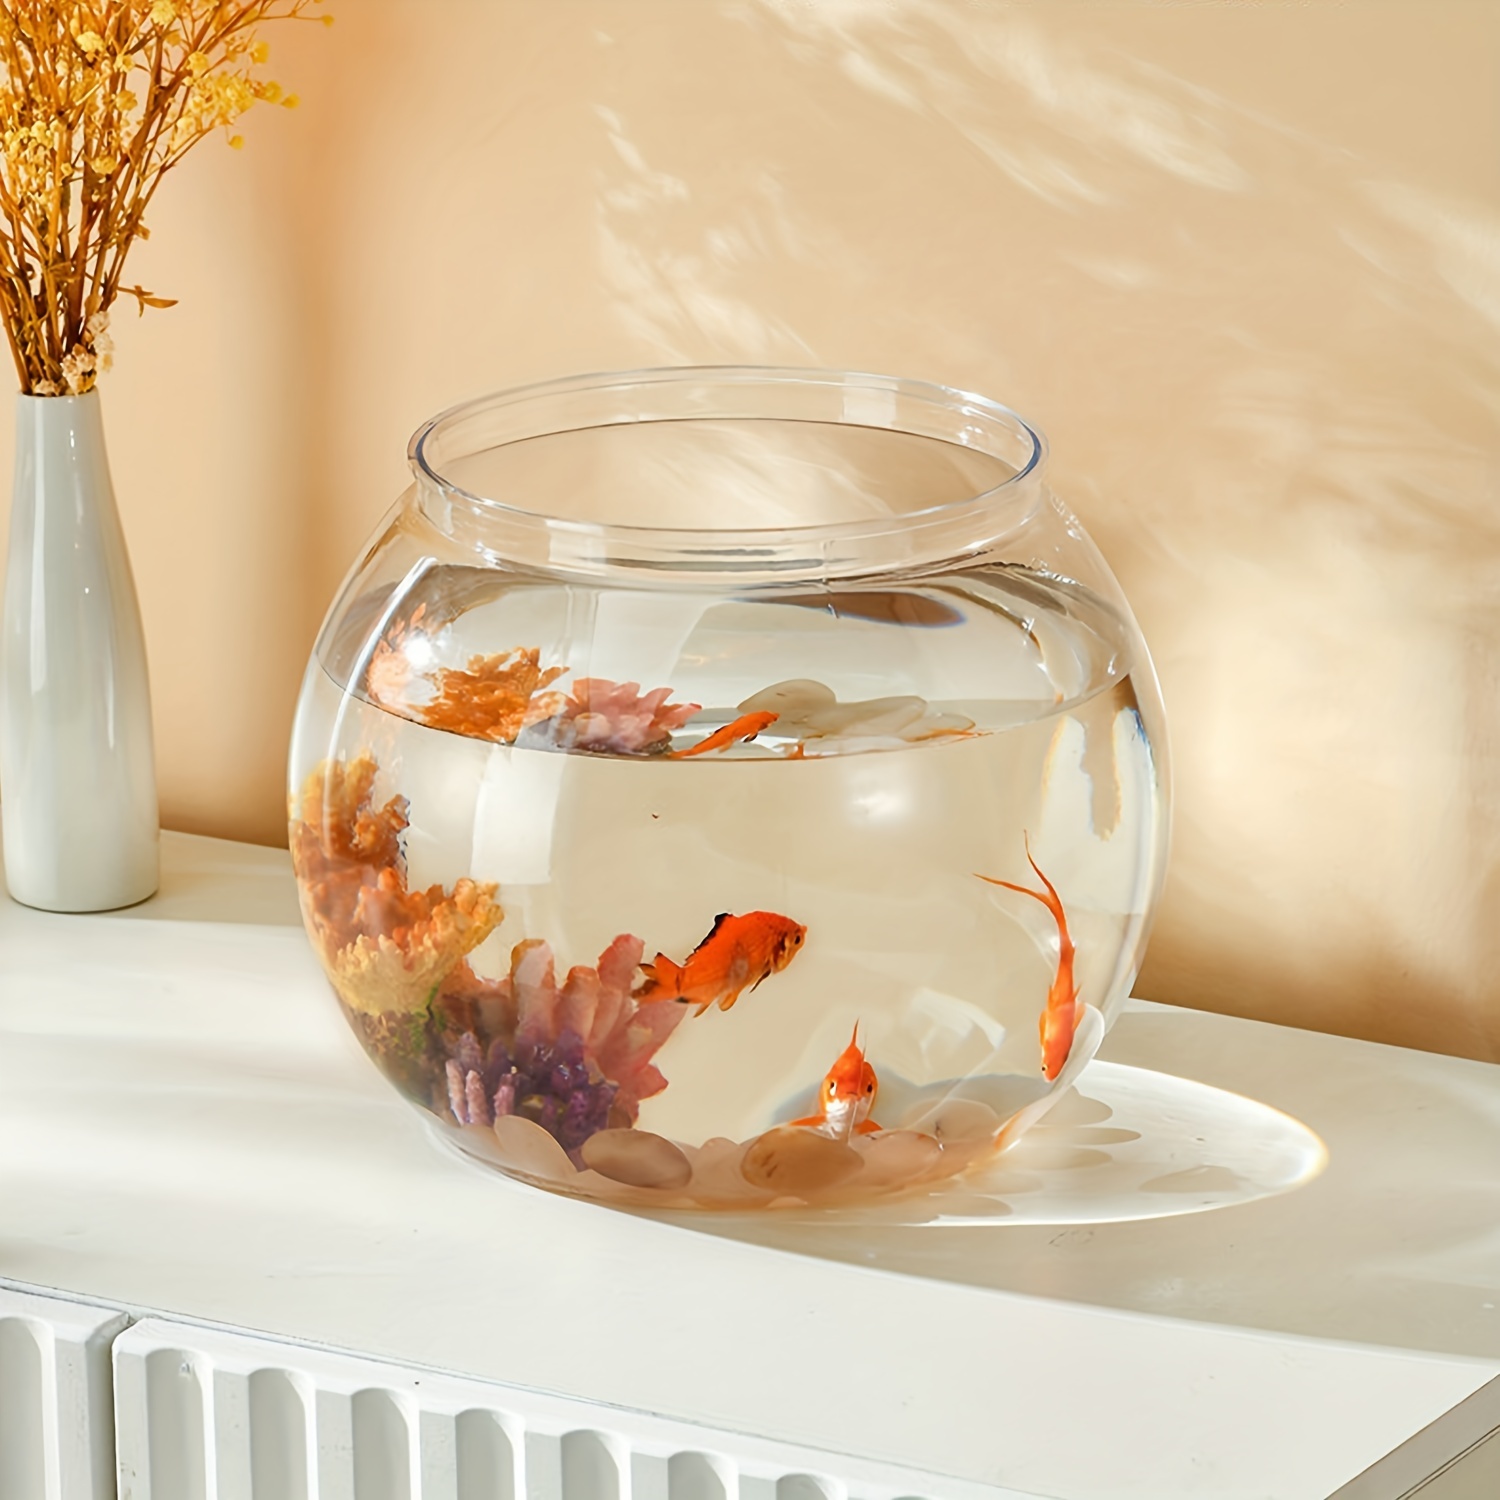 Small Fish Bowl Aquarium for Goldfish, Mini Aquarium Tank, Desktop Fish  Bowls, Nice Home Decor